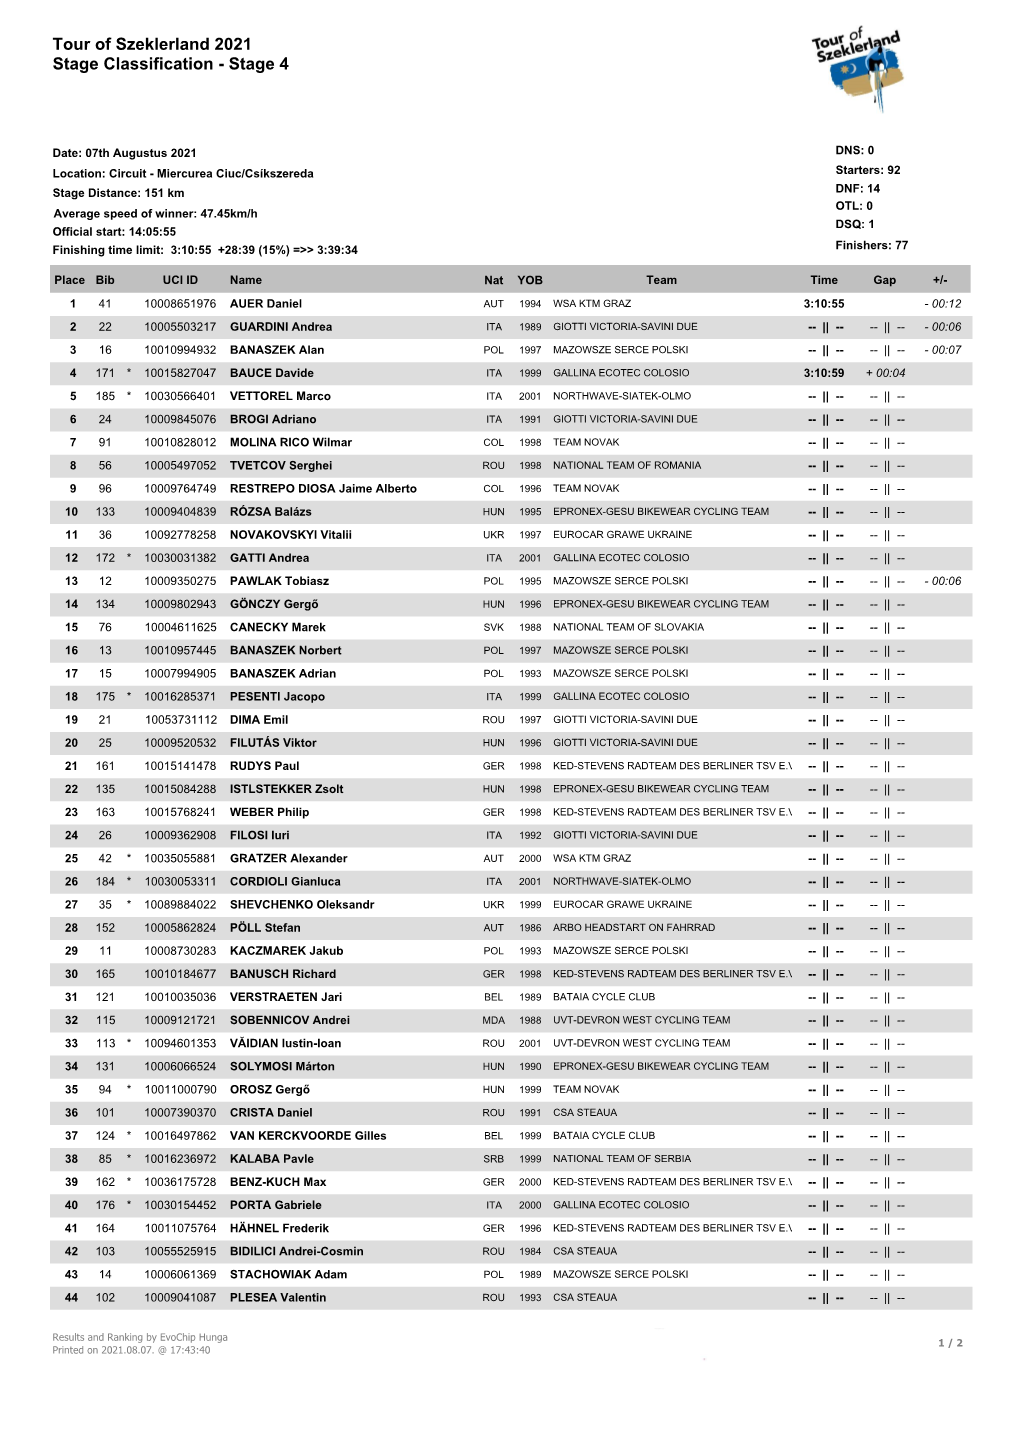 Tour of Szeklerland 2021 Stage Classification - Stage 4